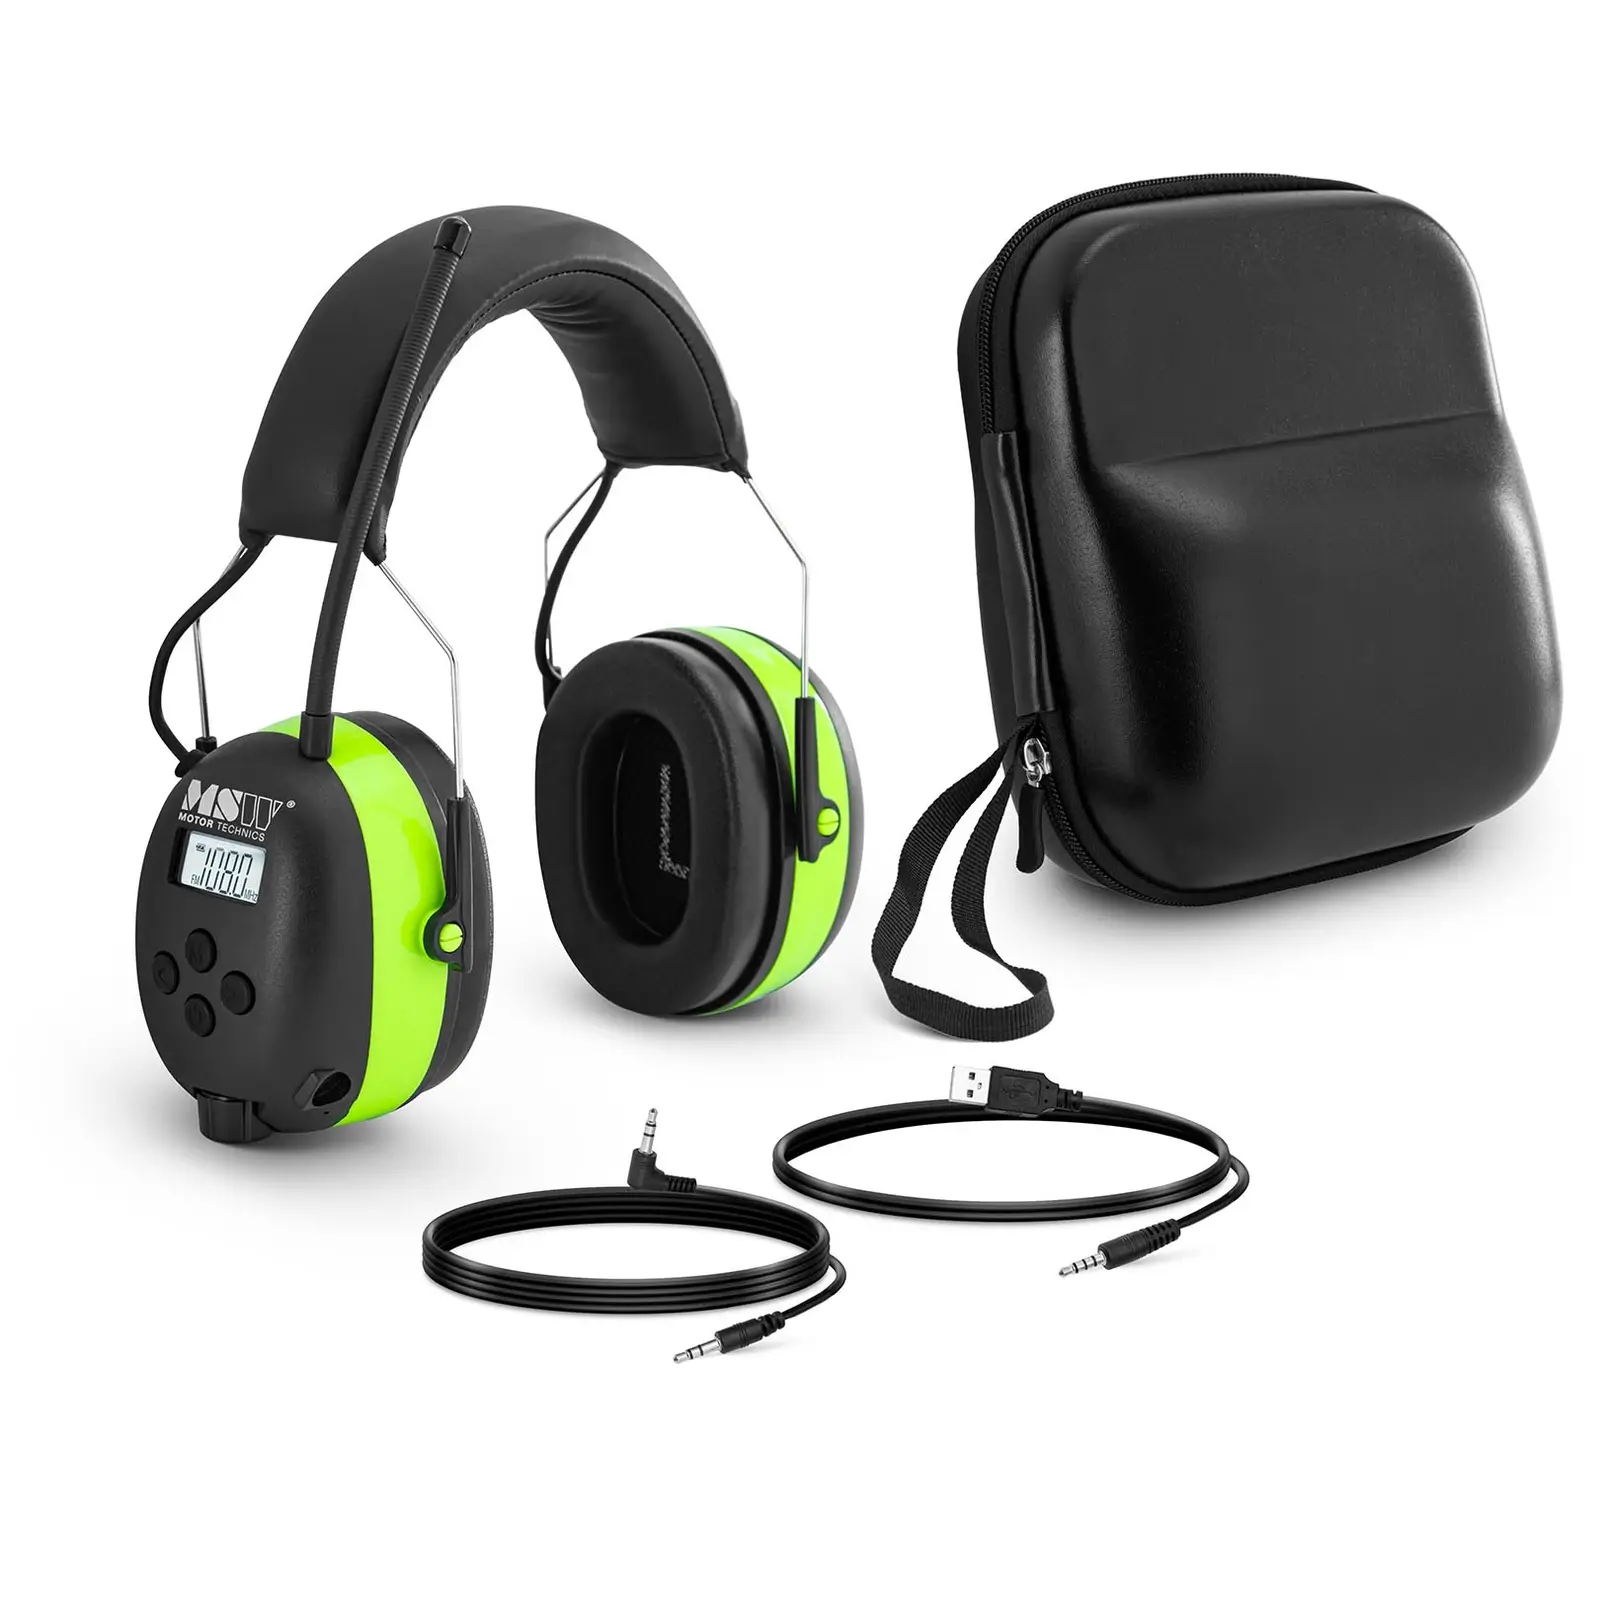 Auscultadores noise cancelling com Bluetooth - microfone - visor LCD - bateria - verde